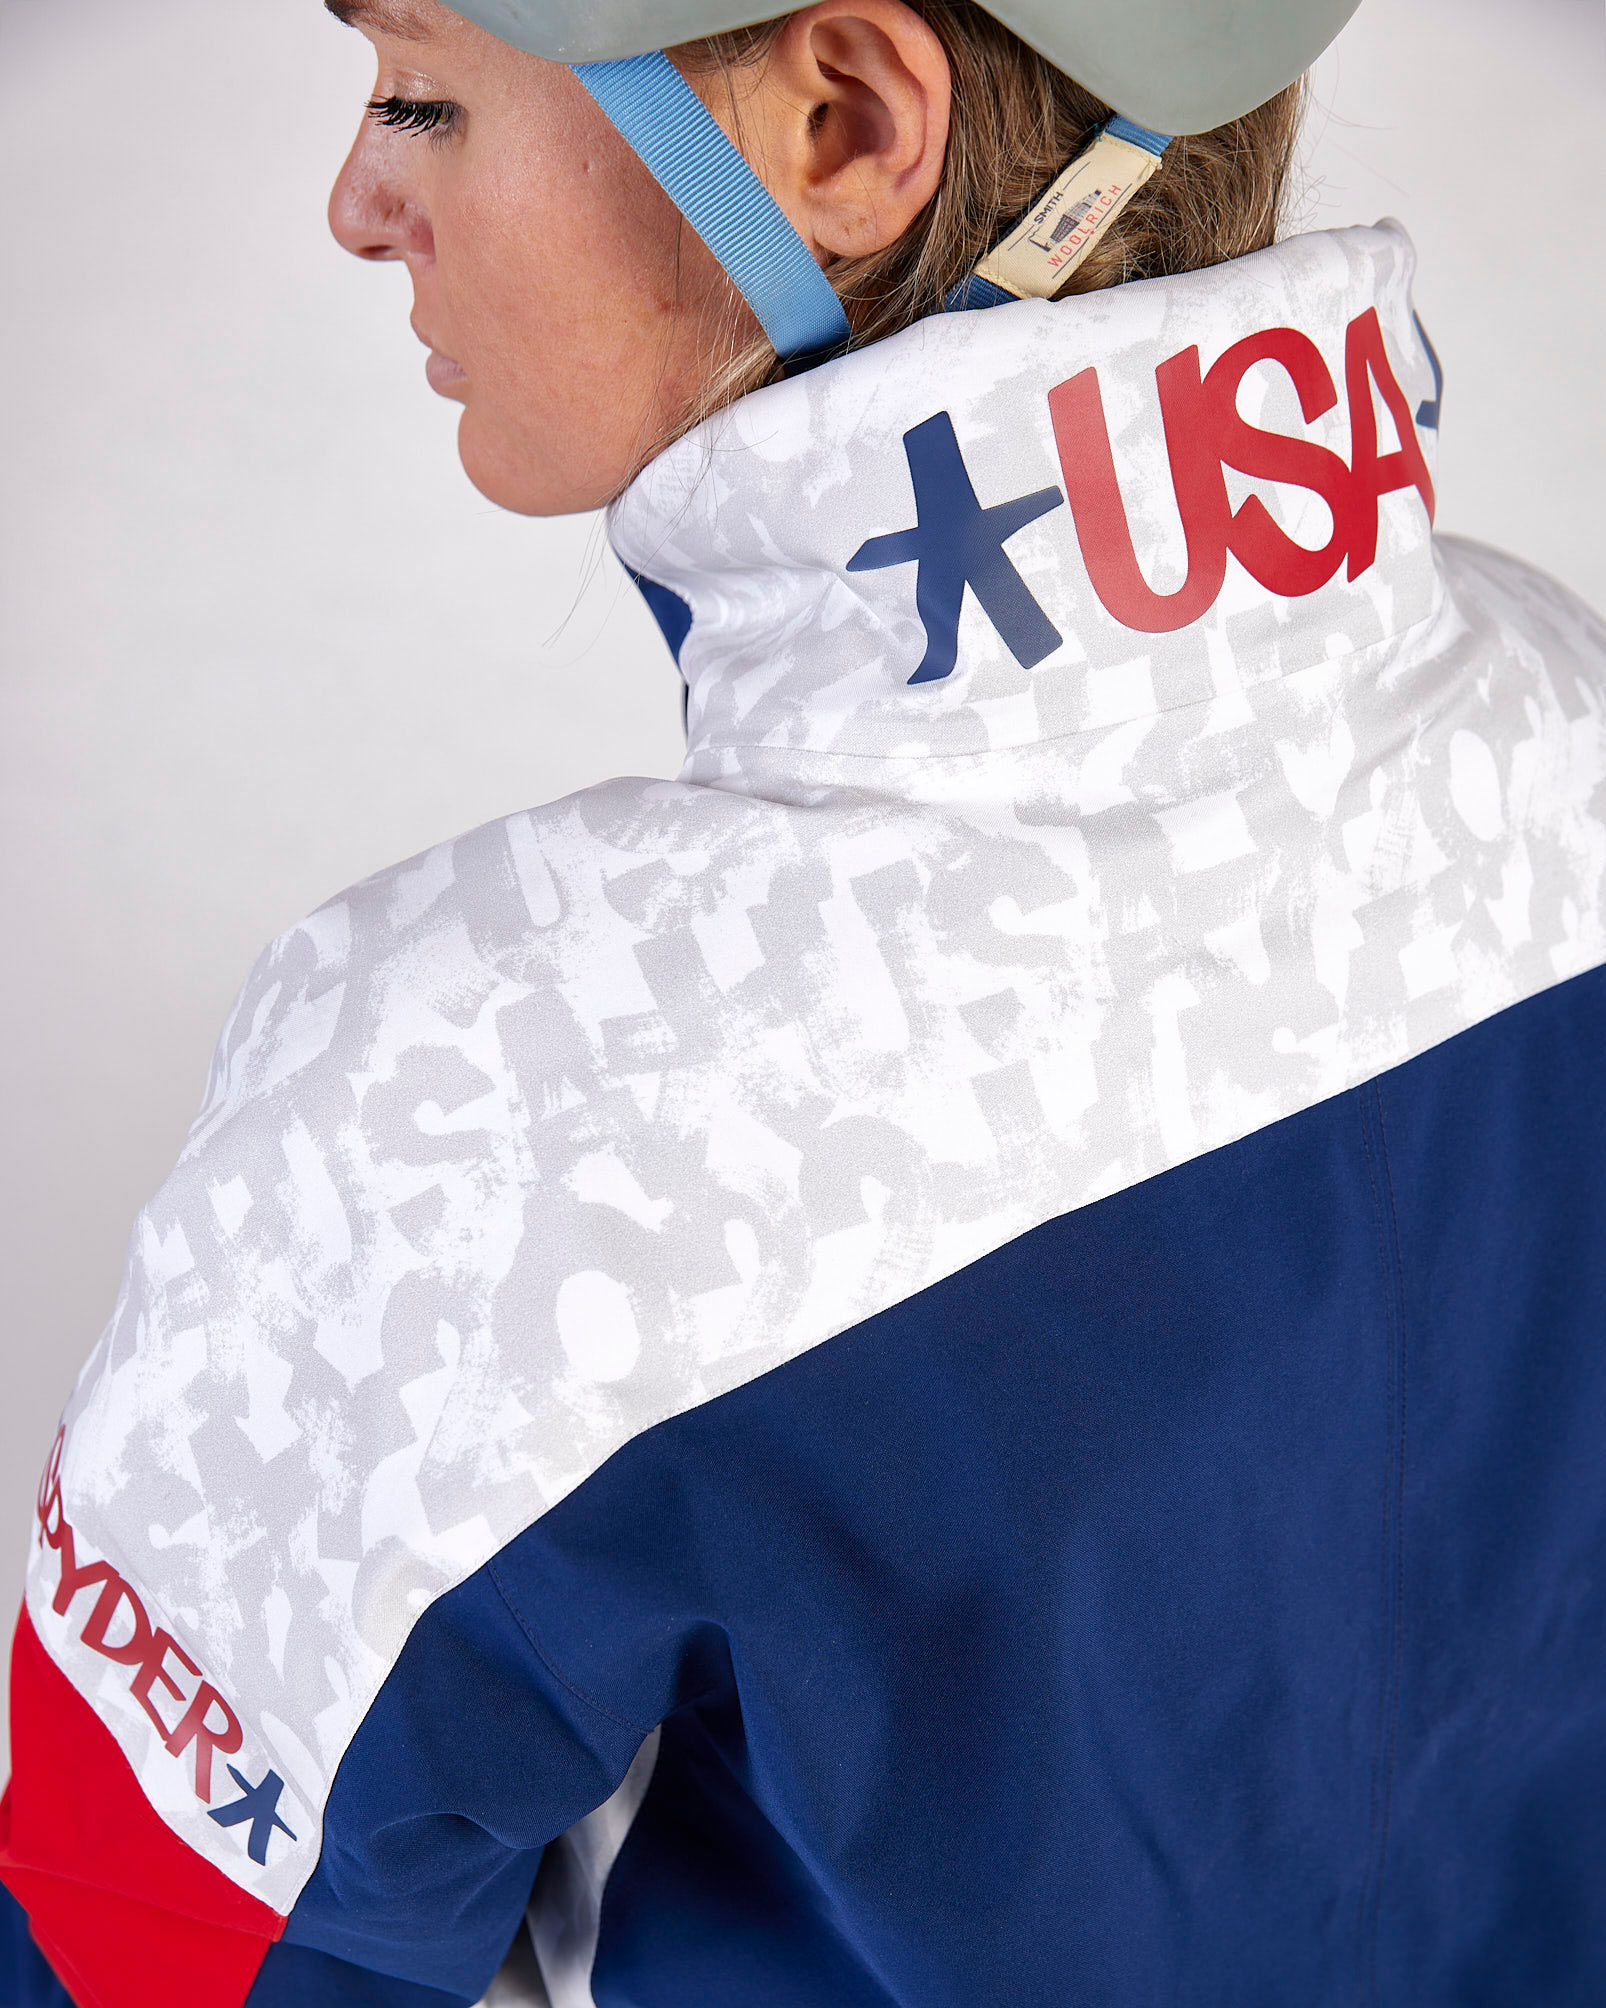 Eric Haze x Olympic US Ski team